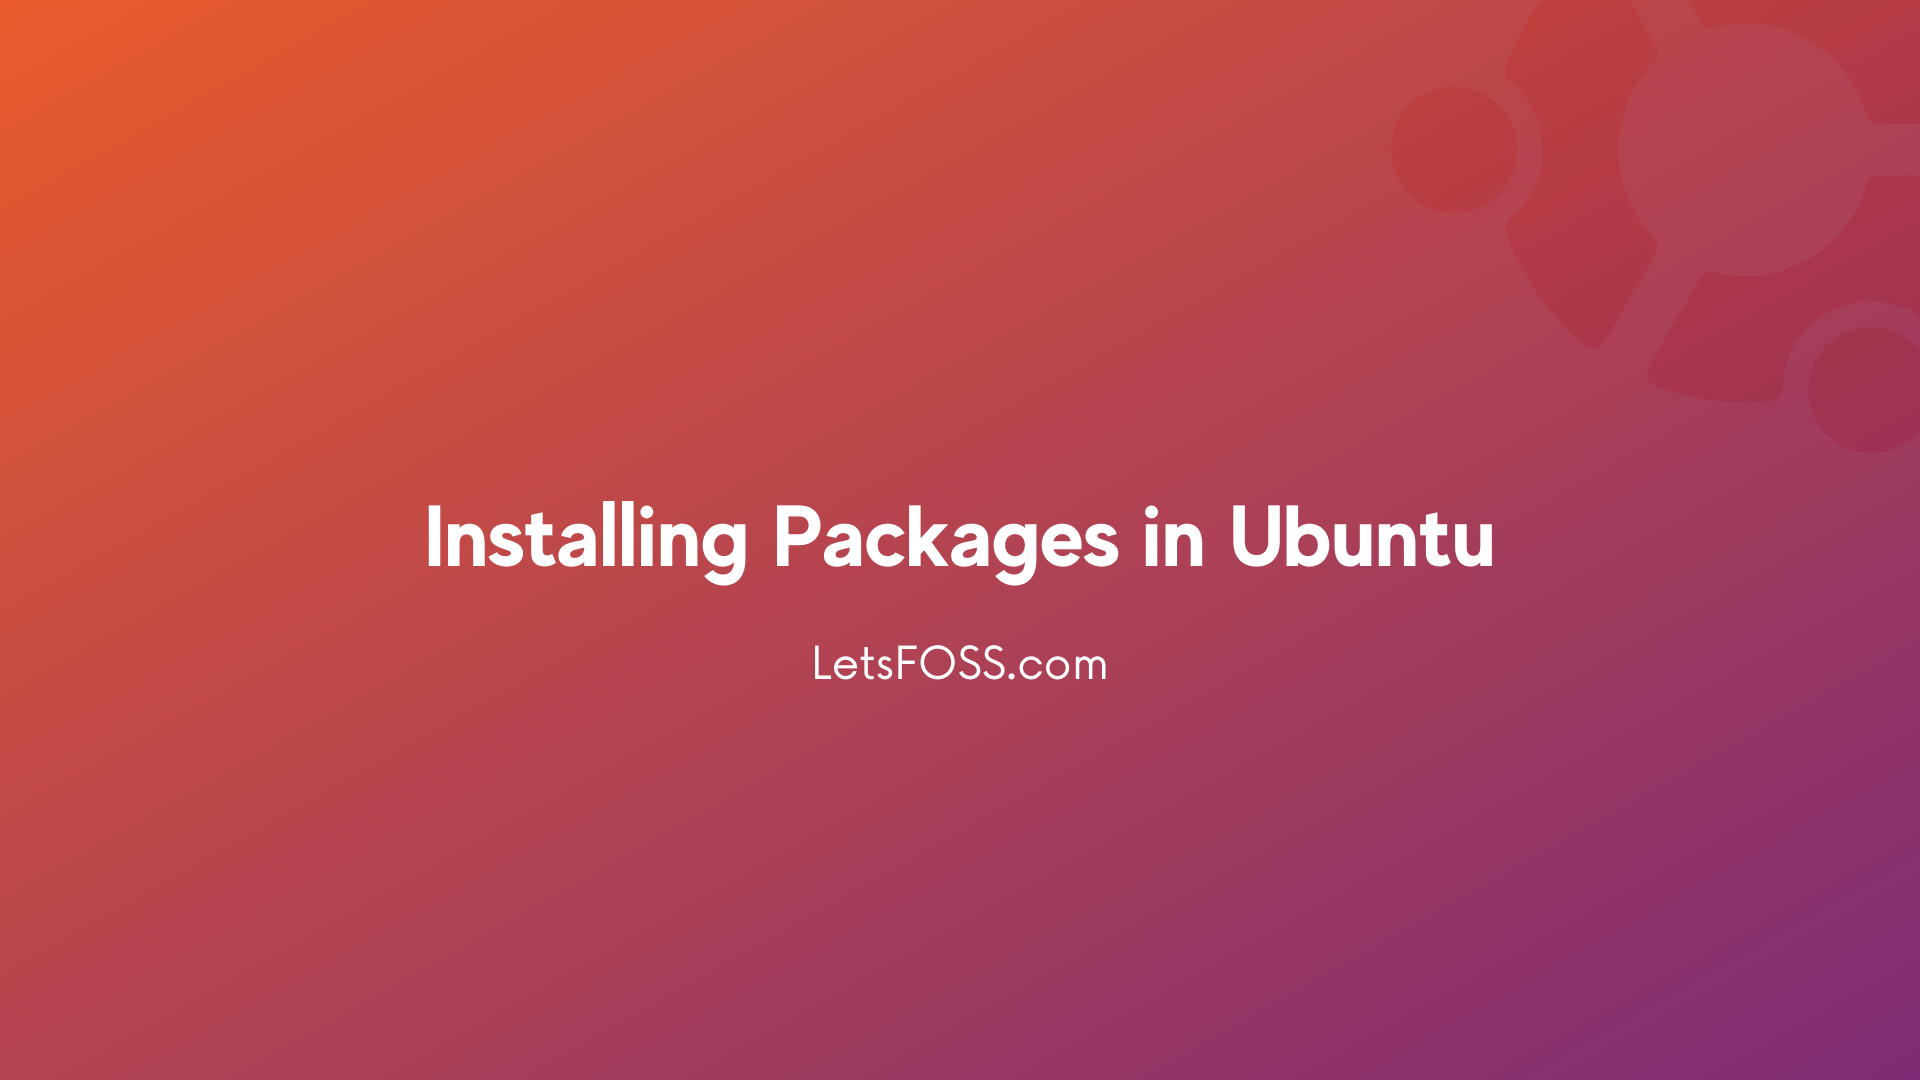 4 Ways to Install Packages in Ubuntu